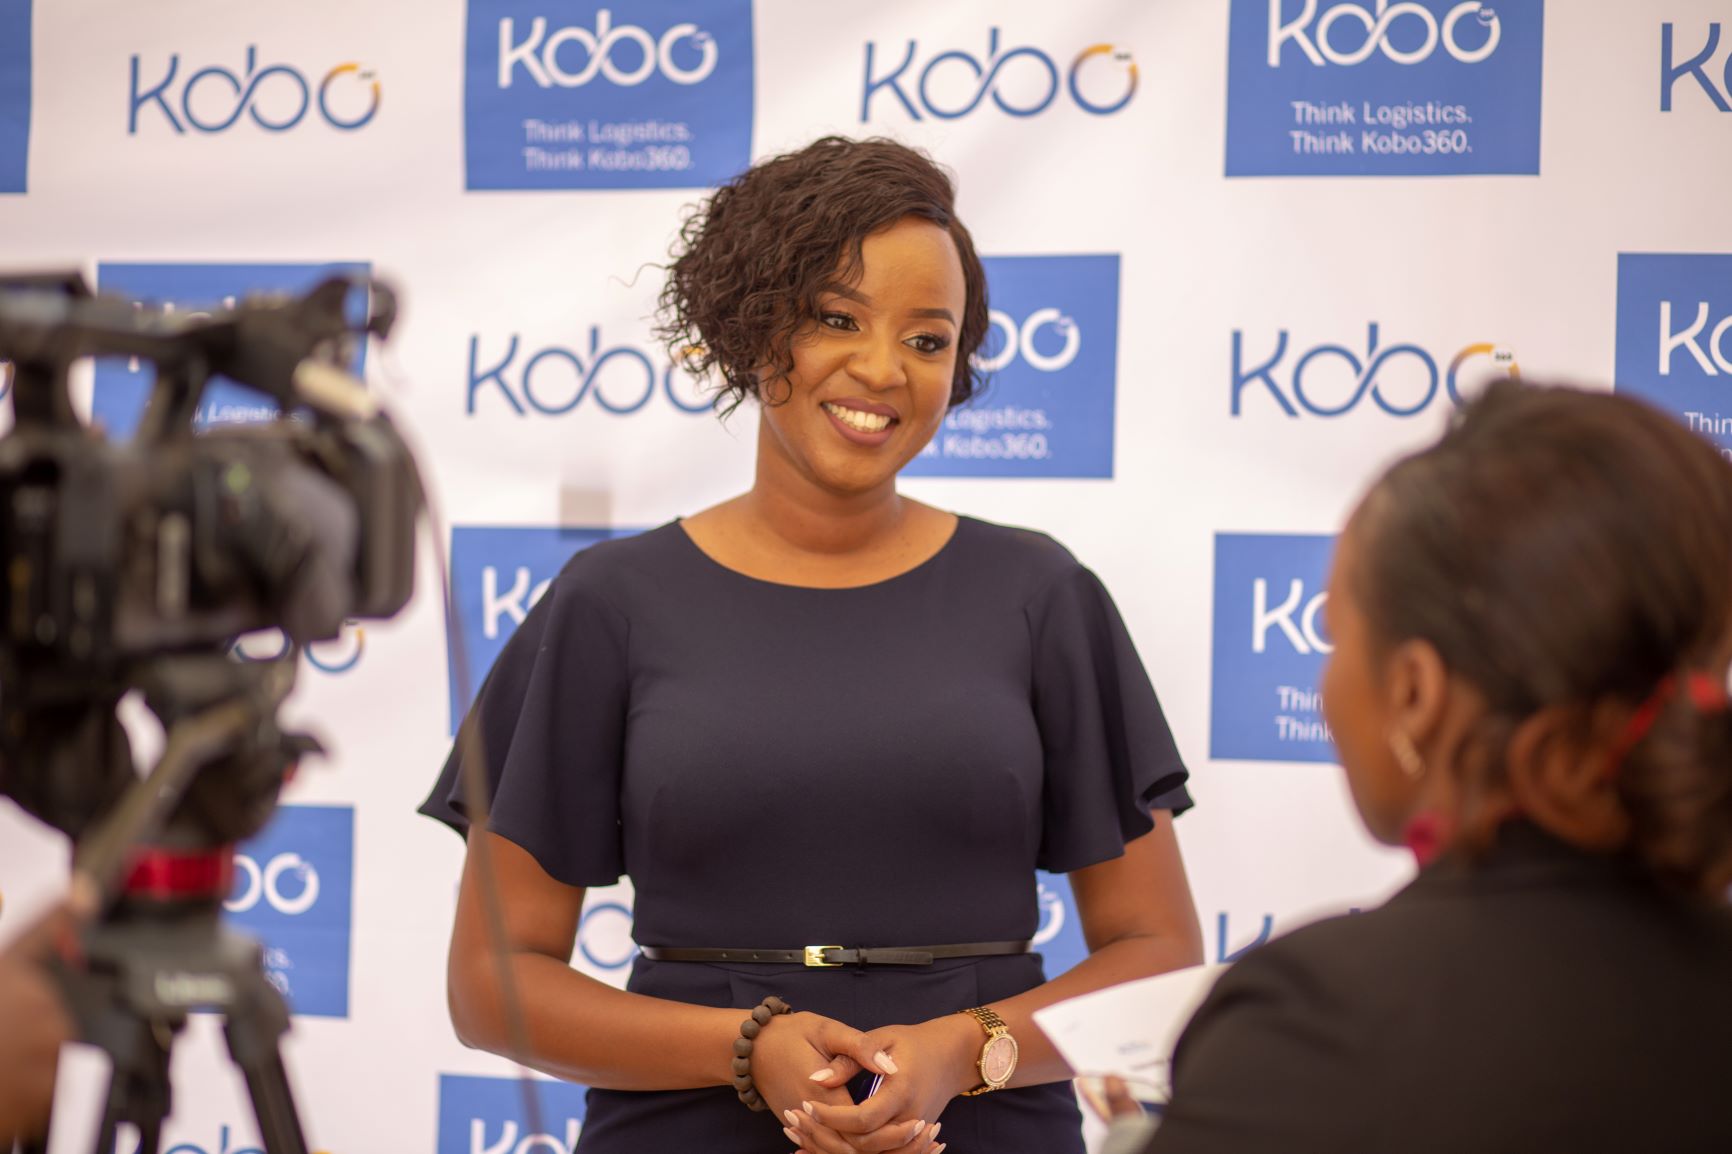 Kagure Wamunyu, Kobo360 CEO Africa Region speaking to press at the Kenya Launch